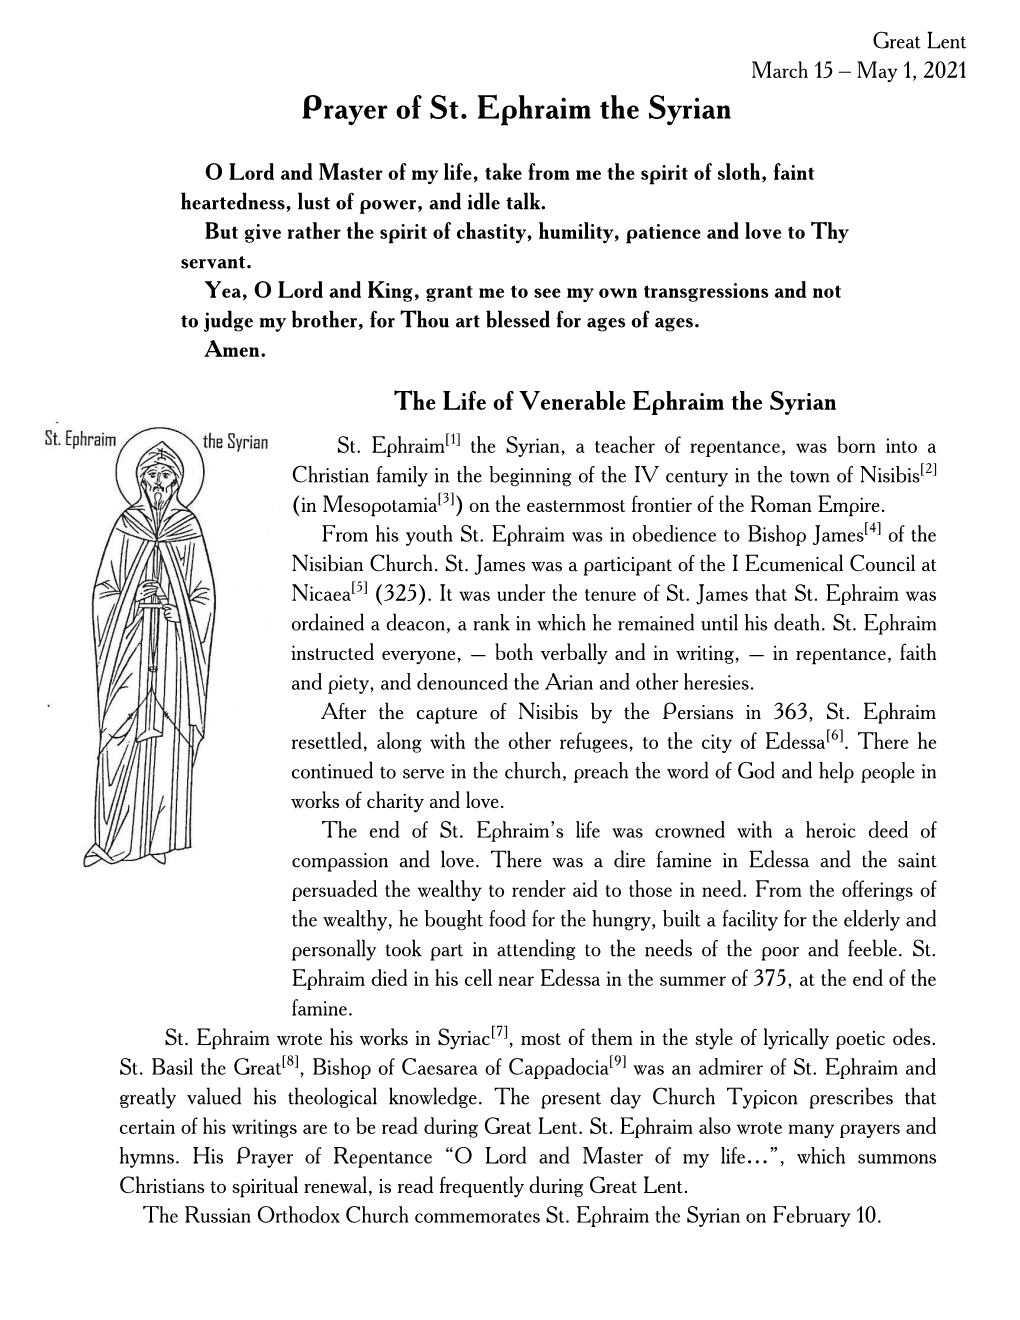 Prayer of St. Ephraim the Syrian